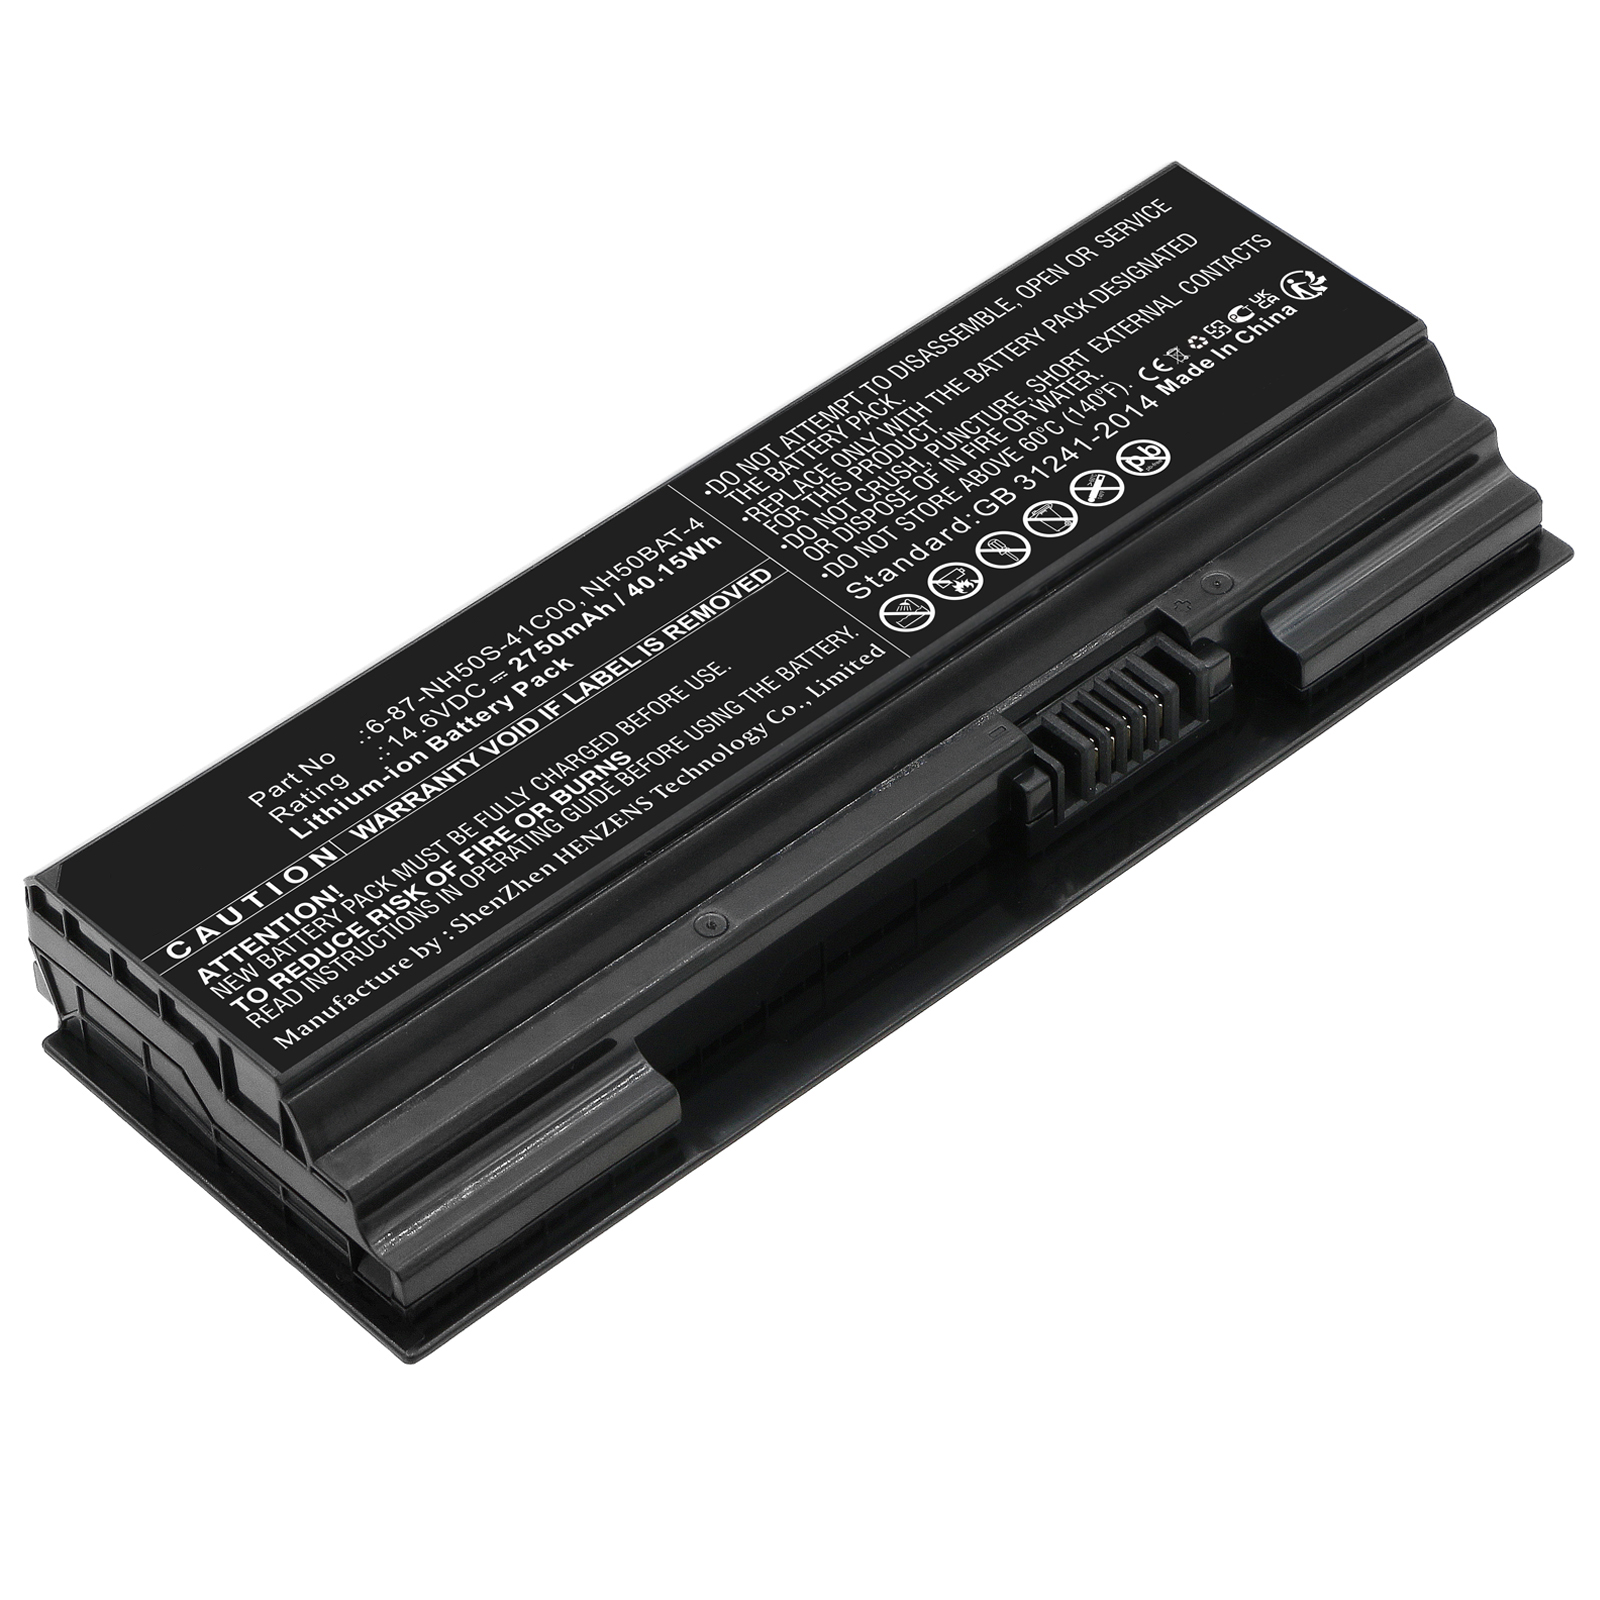 Batteries for MedionLaptop